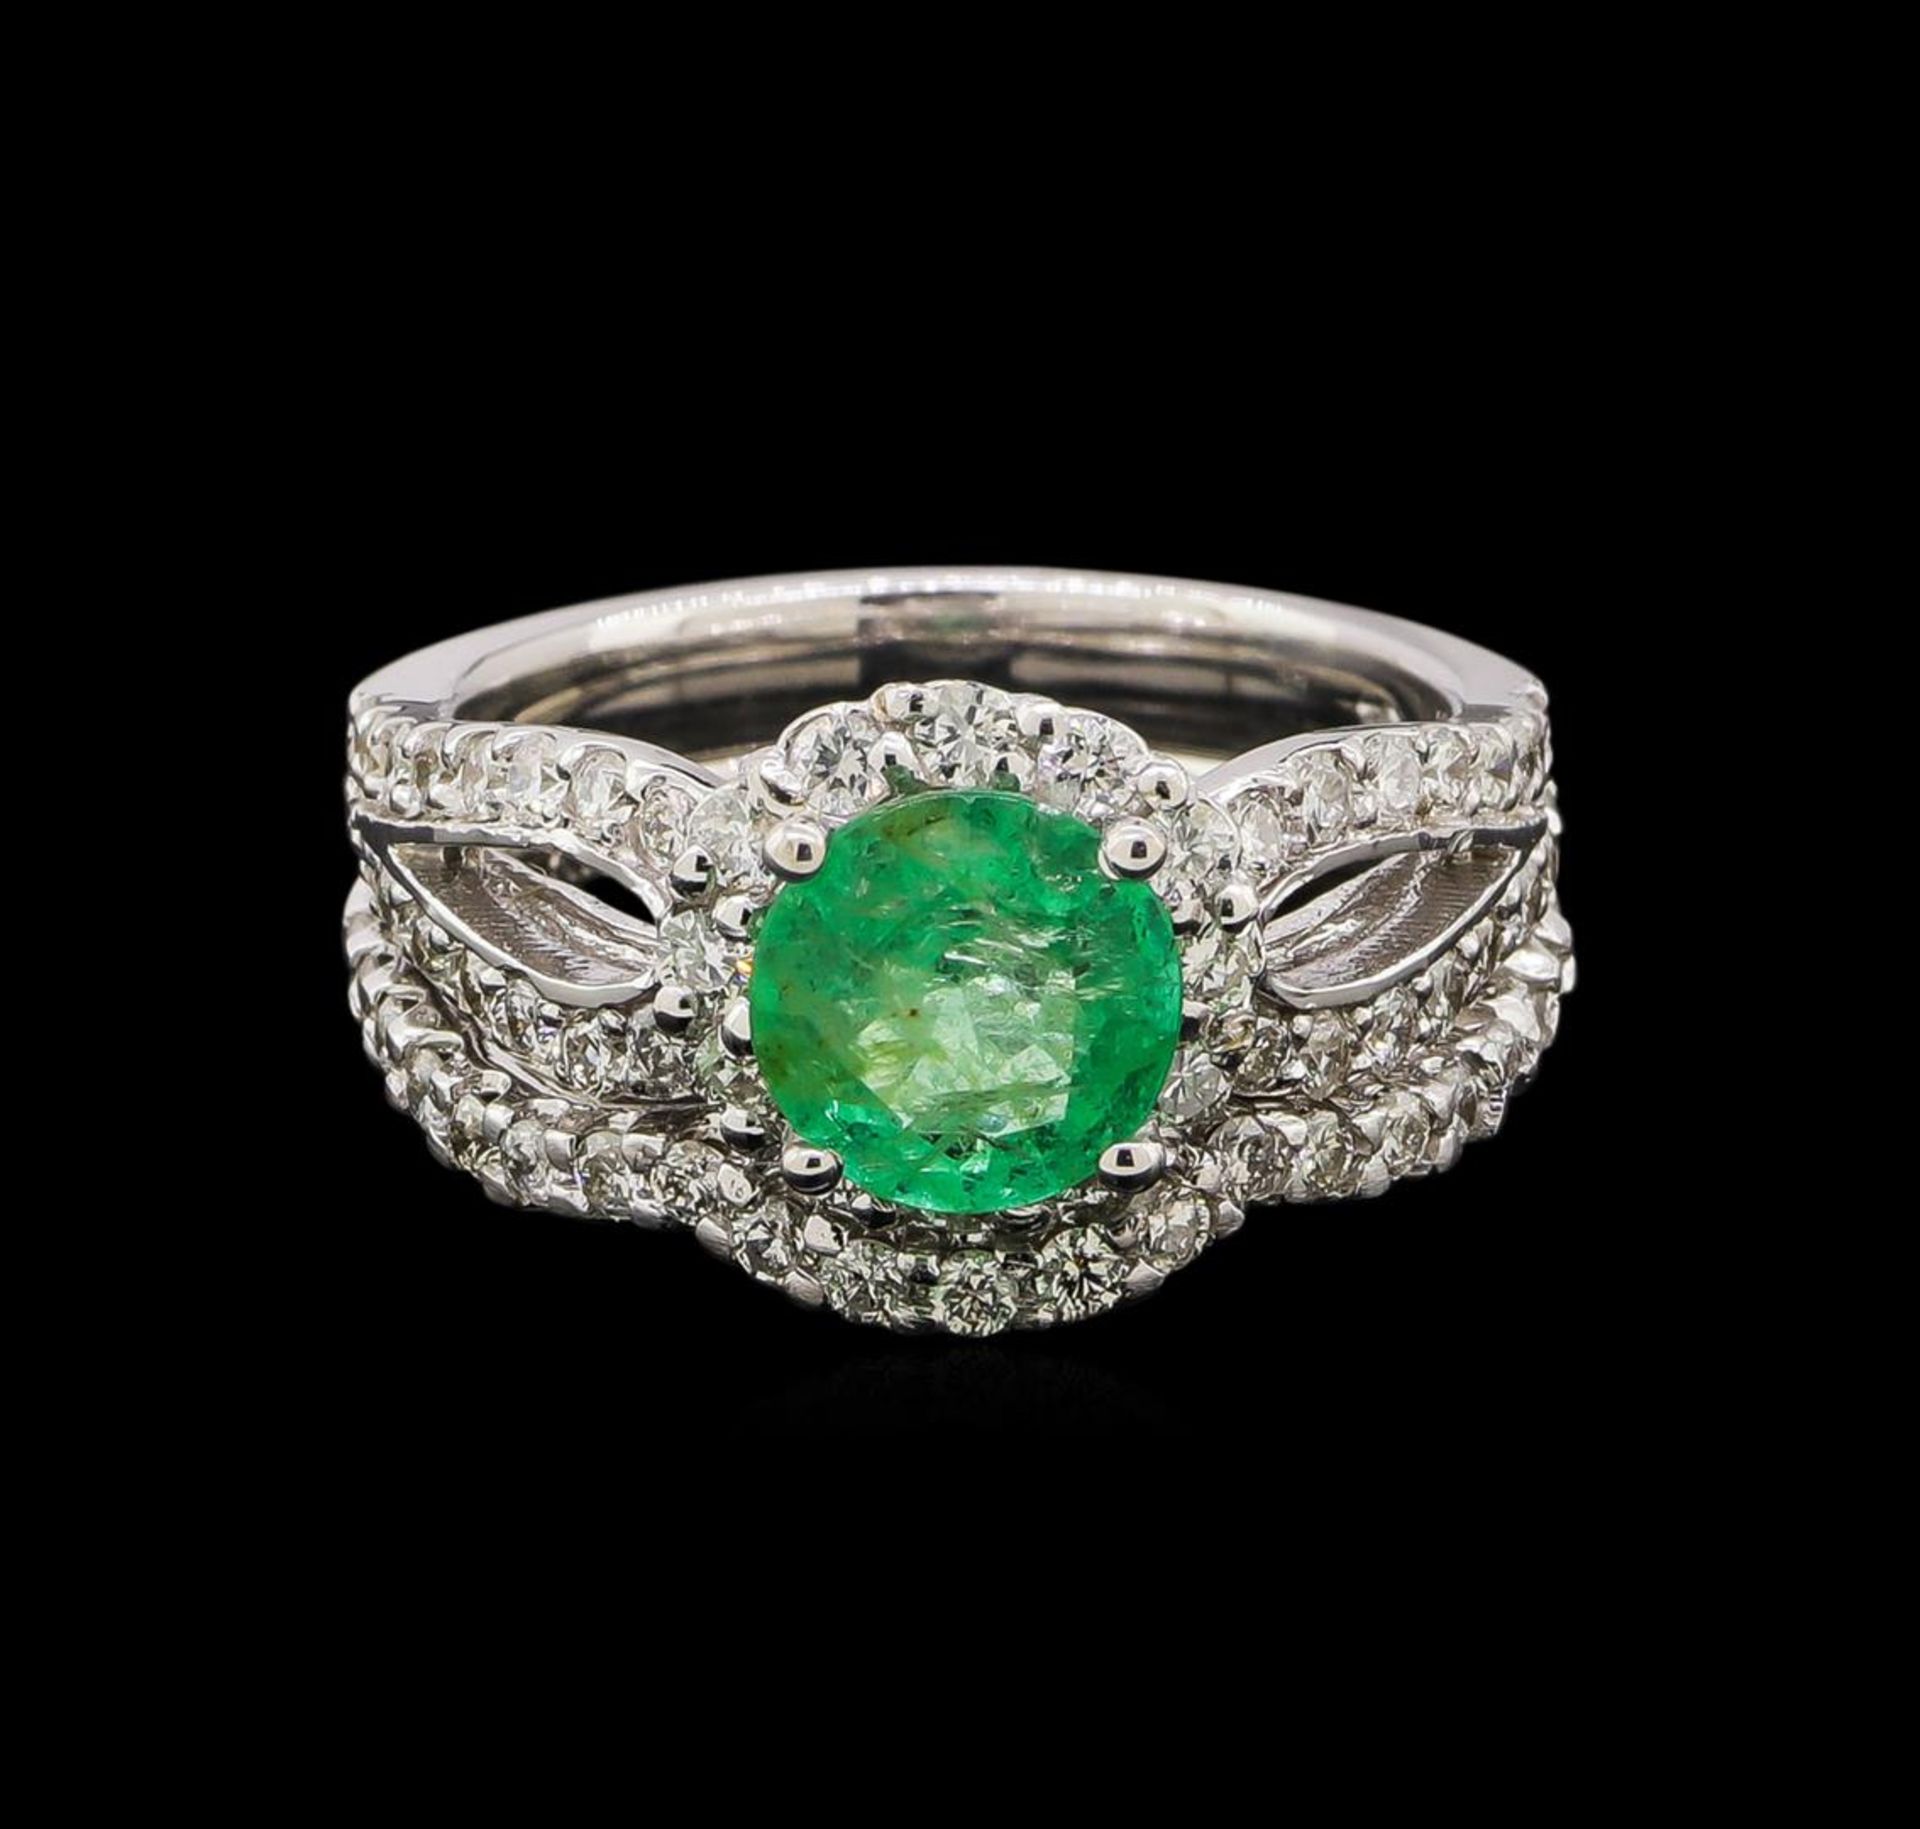 14KT White Gold 1.43 ctw Emerald and Diamond Wedding Ring Set - Image 2 of 4